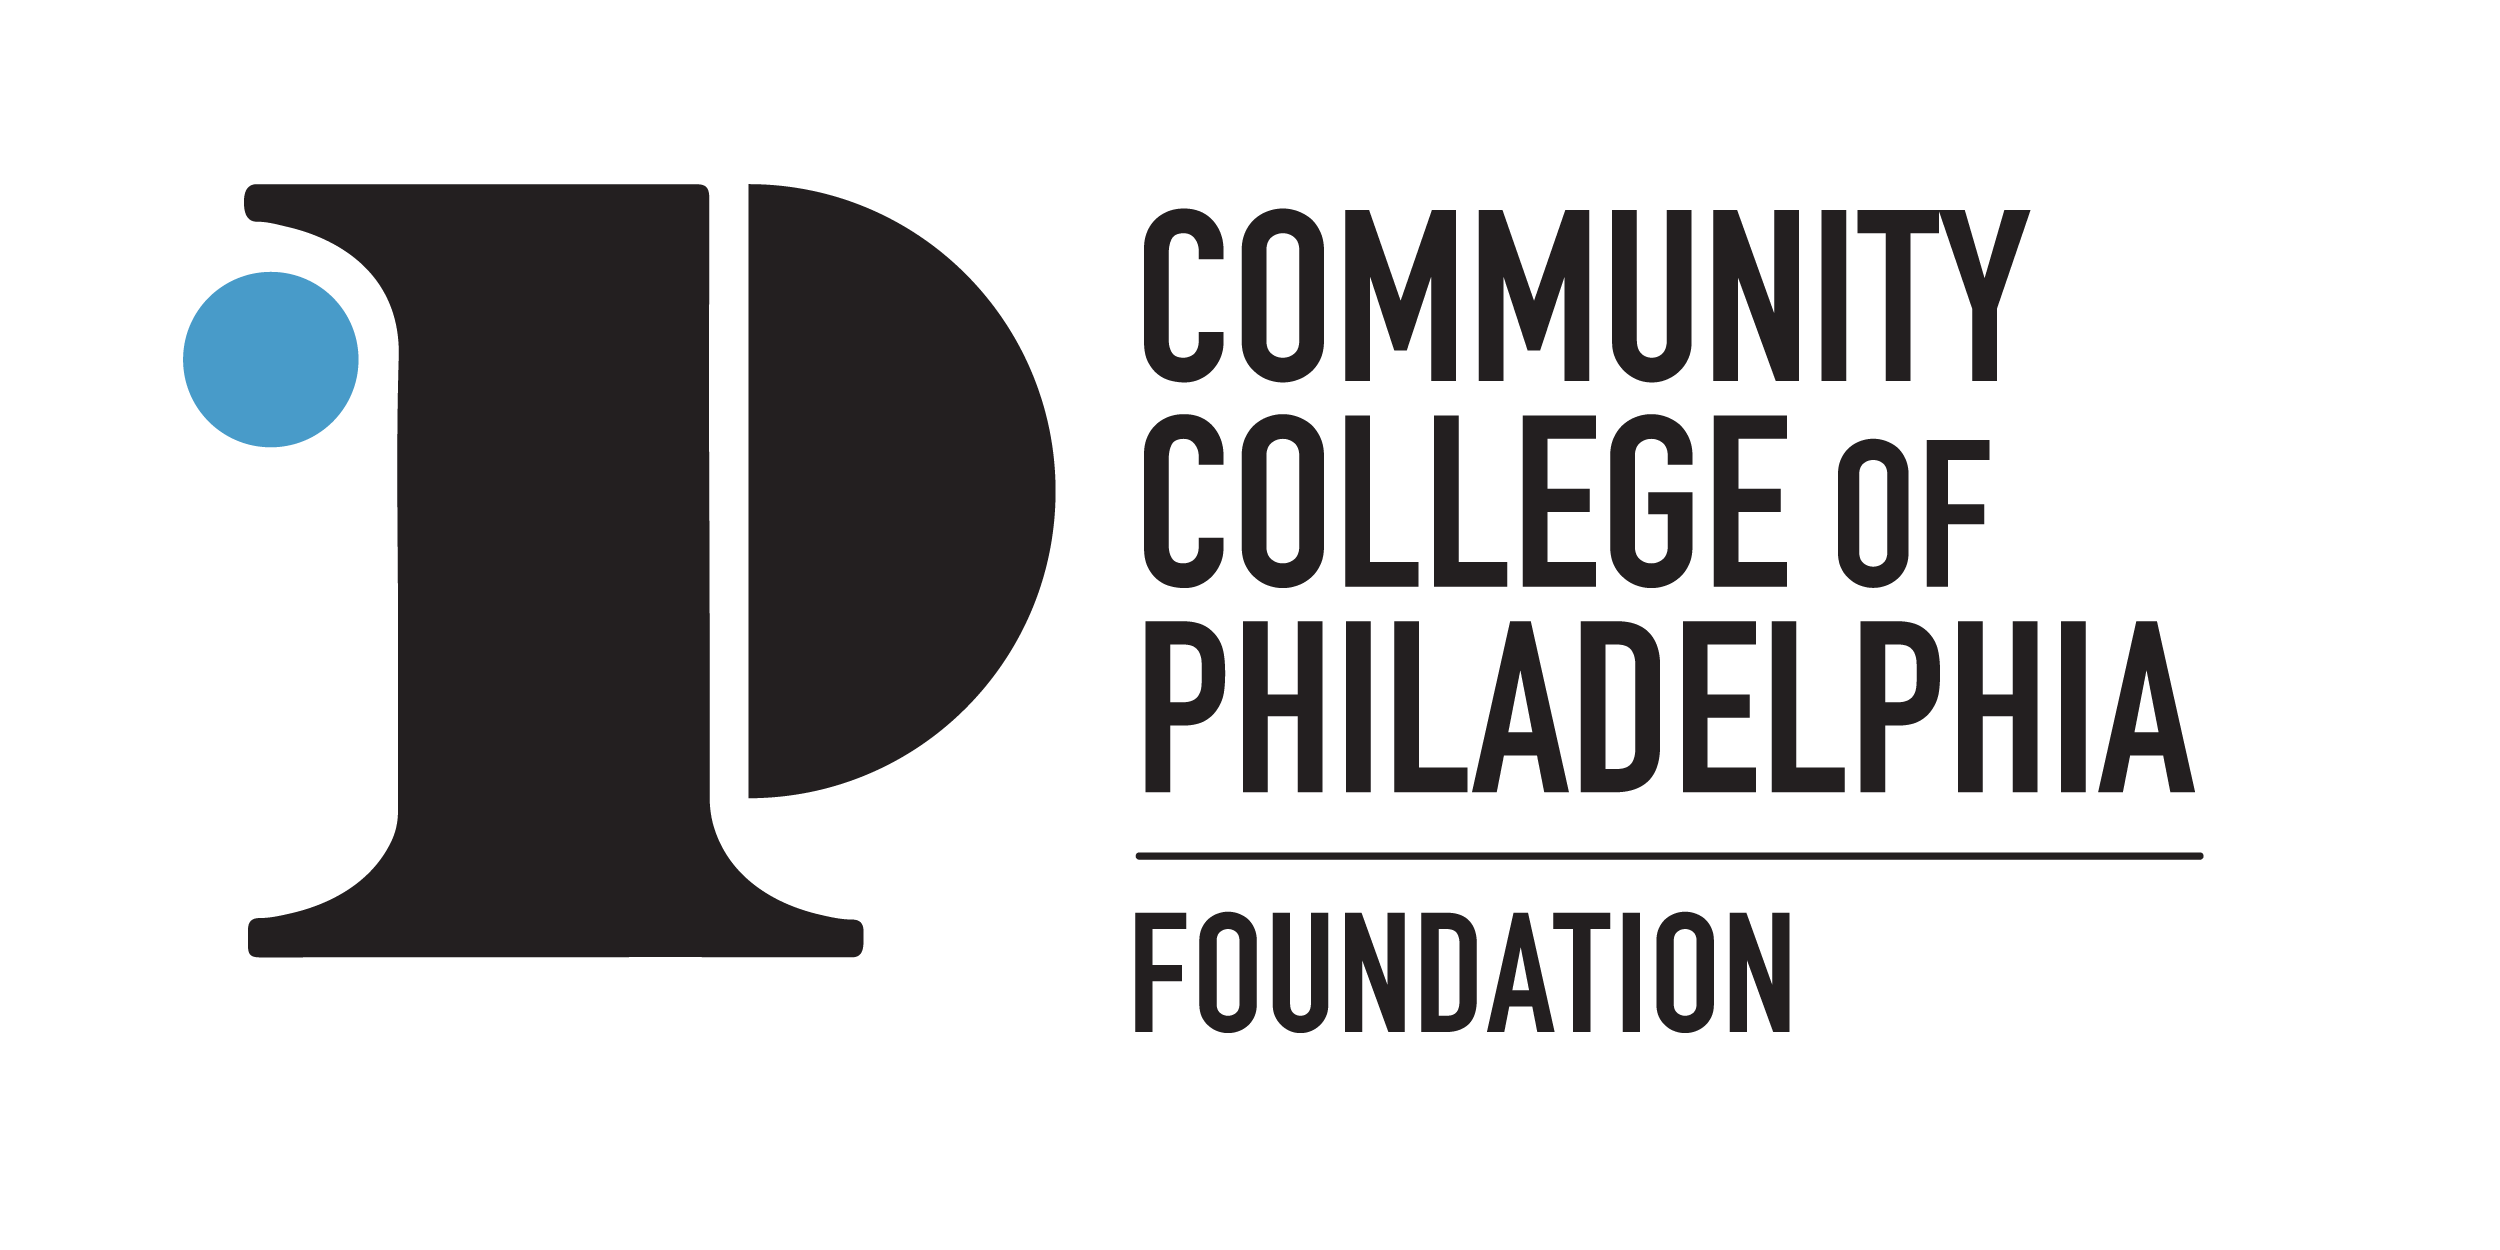 Community College of Philadelphia Foundation